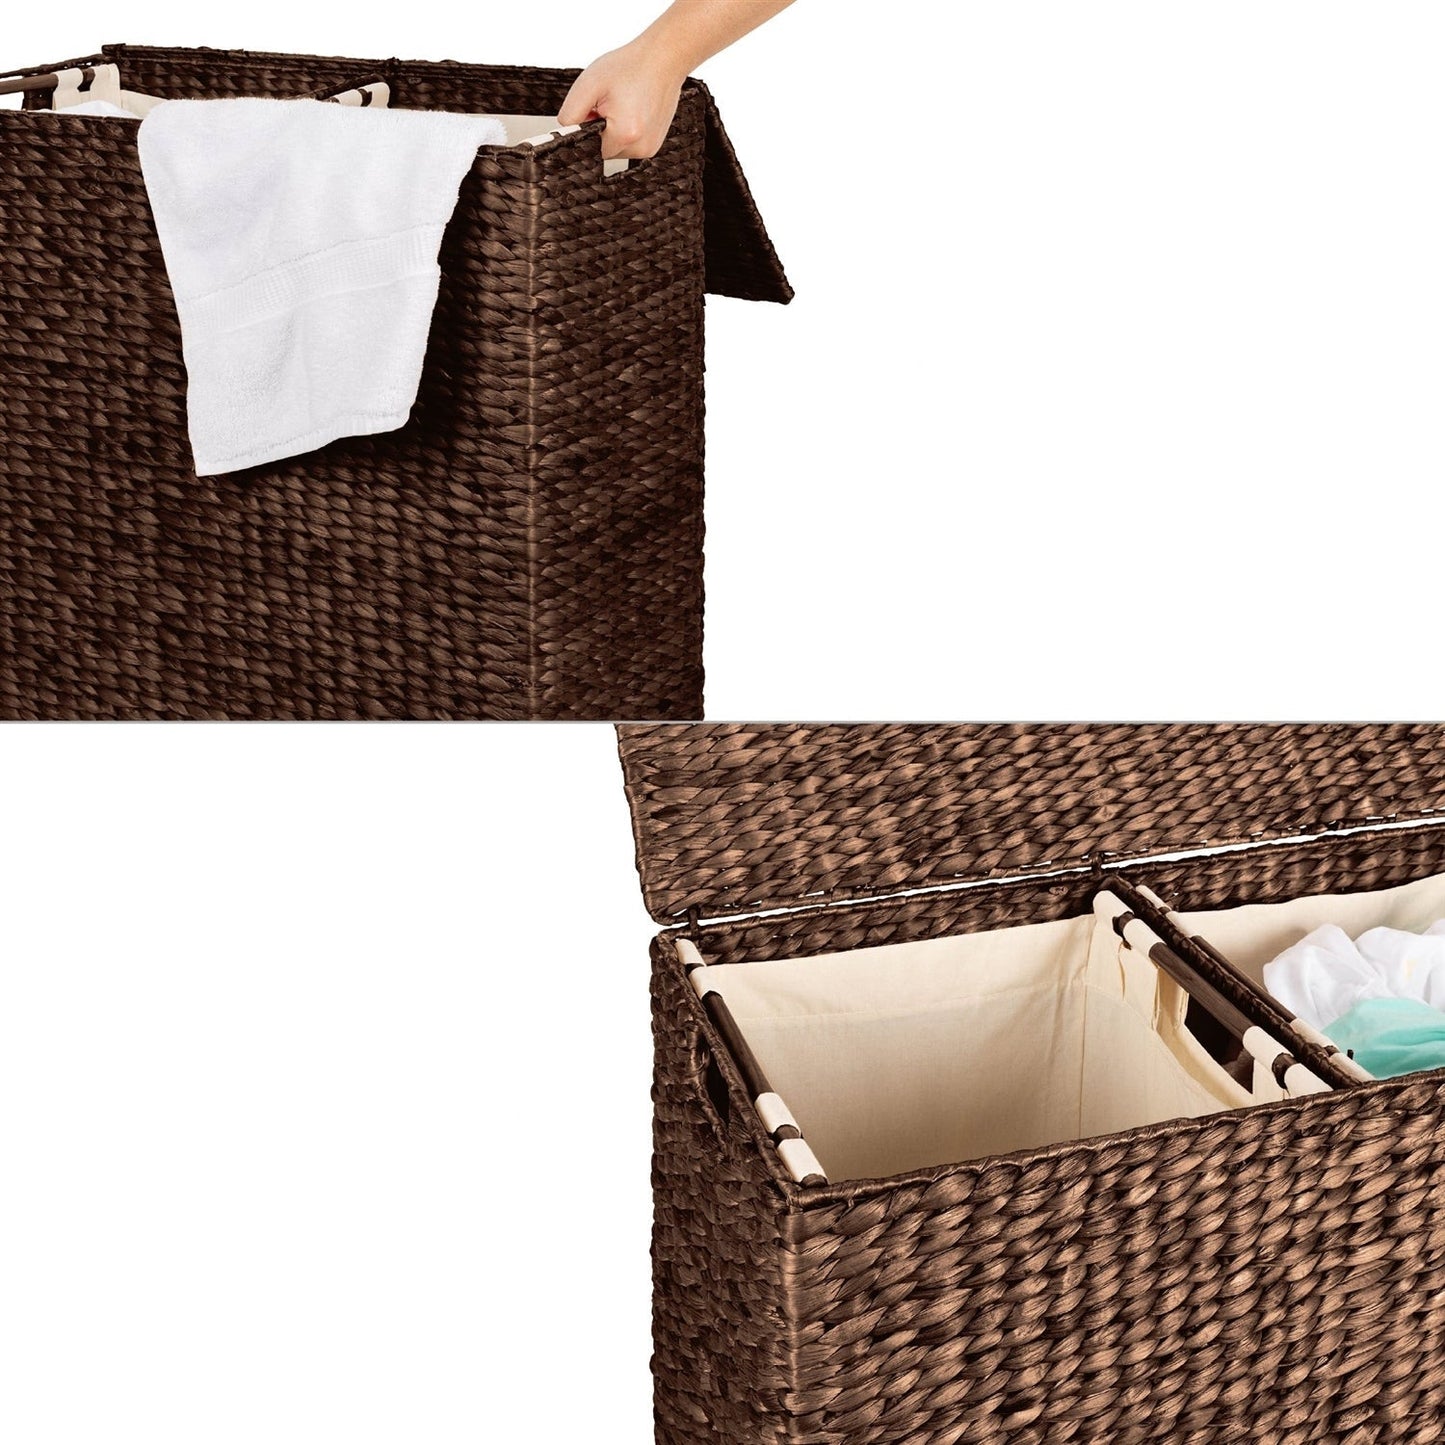 Bathroom > Laundry Hampers - Espresso 2-Bin Handwoven Hyacinth Linen Liner Laundry Hamper W/ Handles